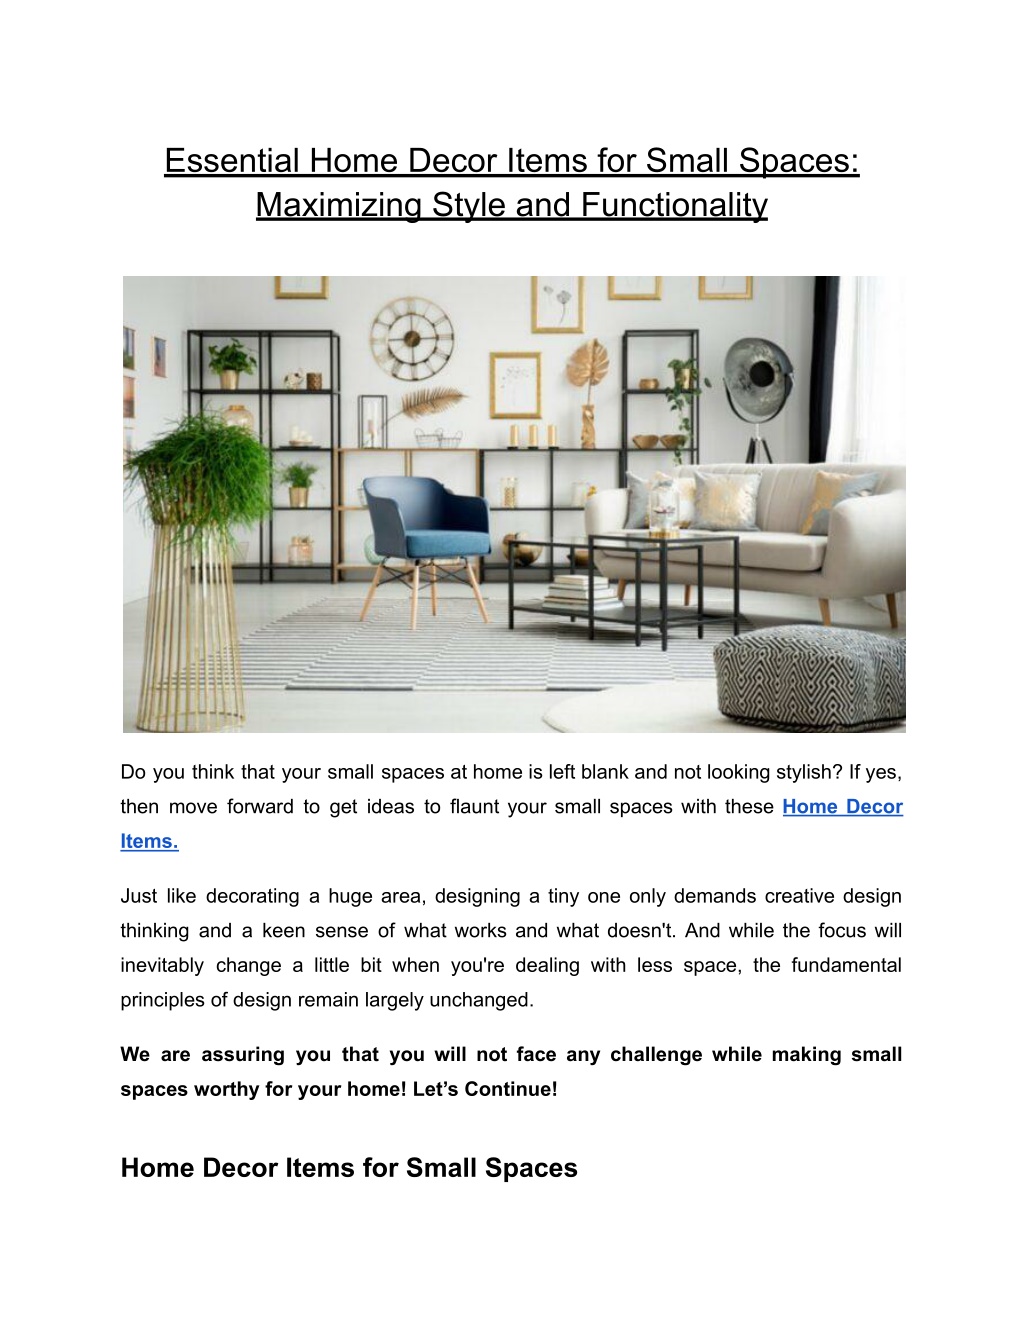 https://image7.slideserve.com/12293255/essential-home-decor-items-for-small-spaces-l.jpg